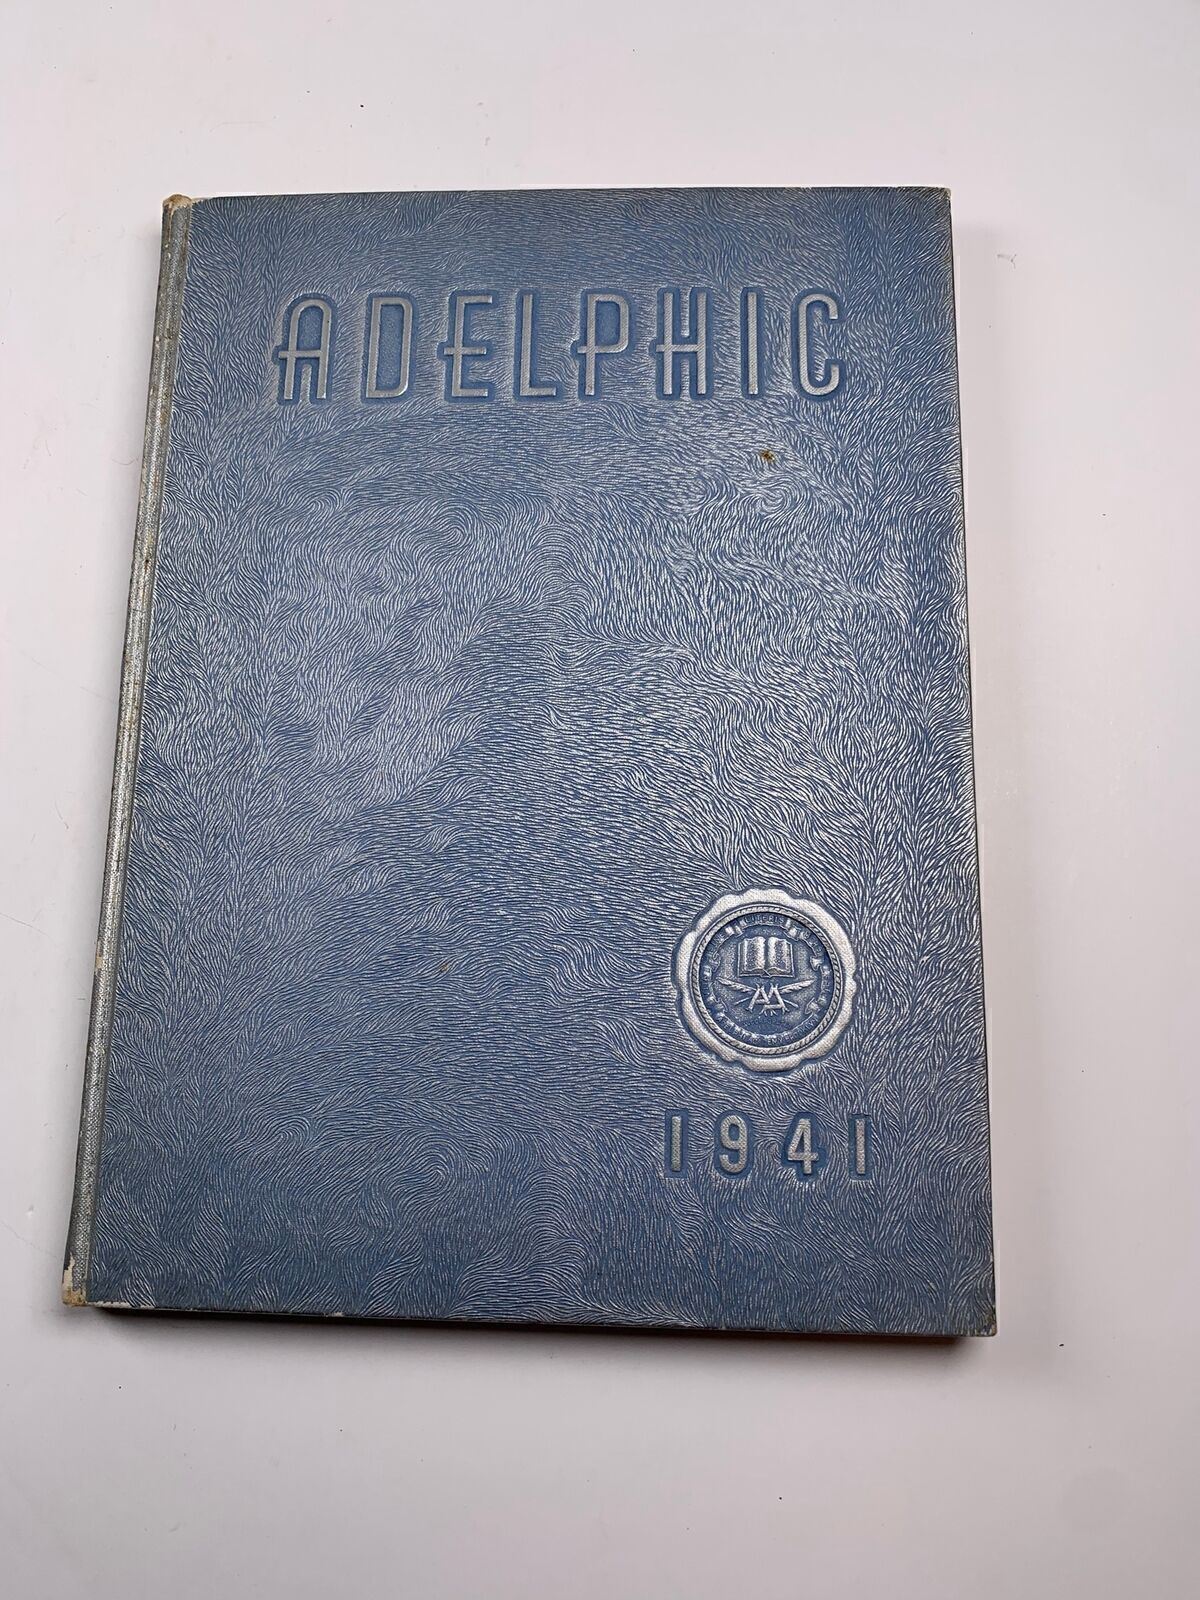 Adelphi Academy School Yearbook Brooklyn New York 1941